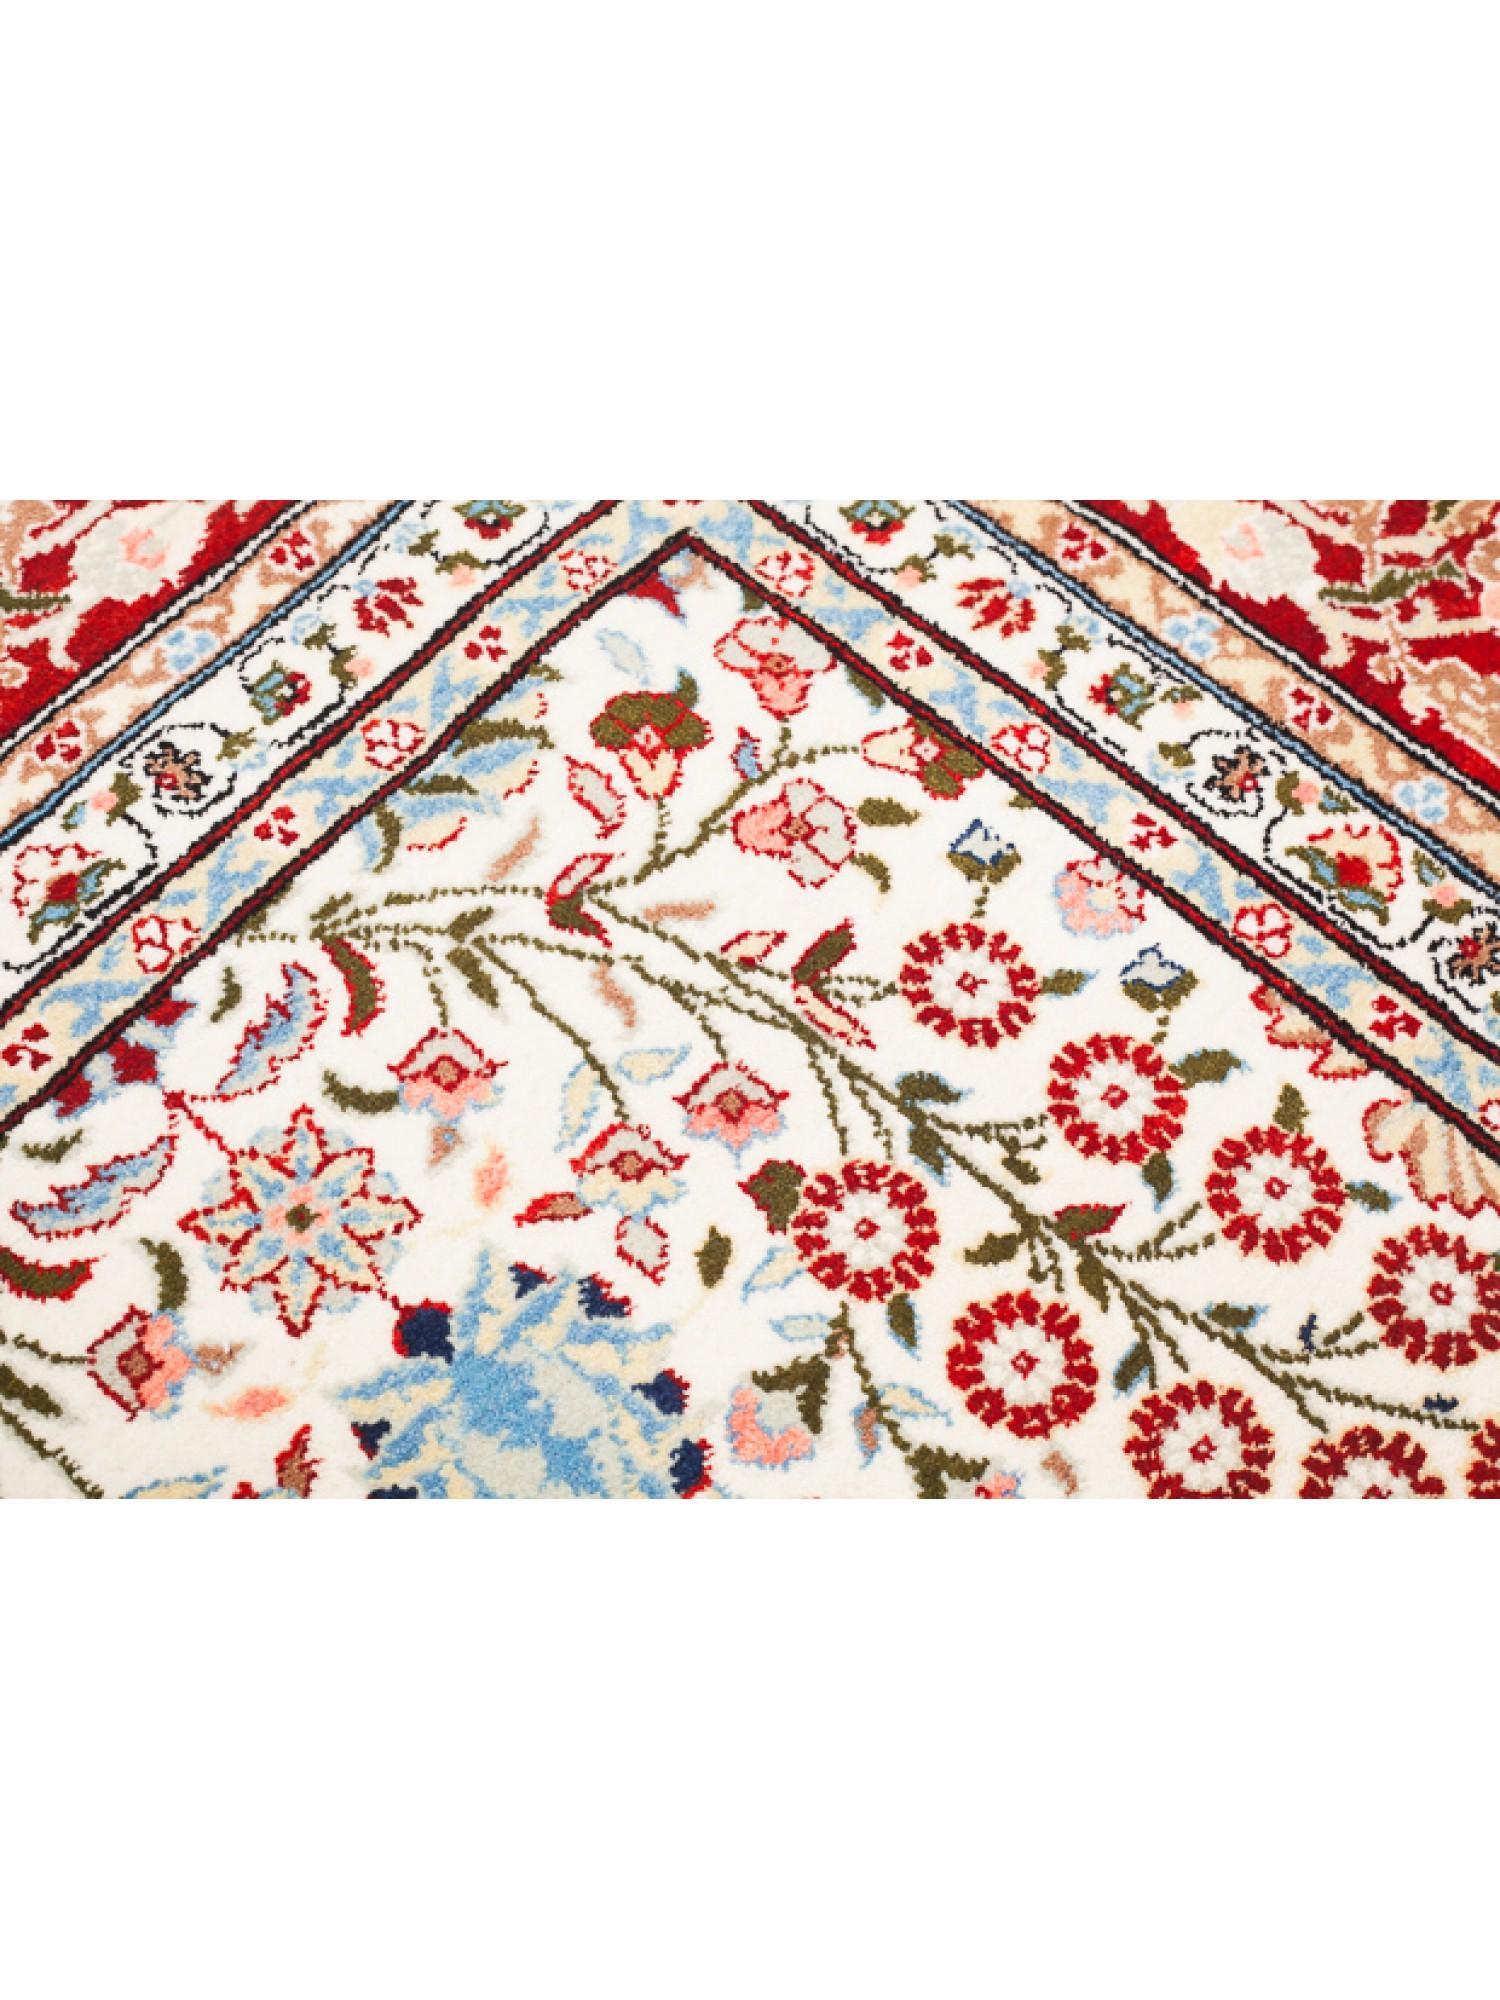 Hand-Knotted Hereke Wool & Cotton Carpet, Turkish Anatolian Rug, Flowers Lattice Design For Sale